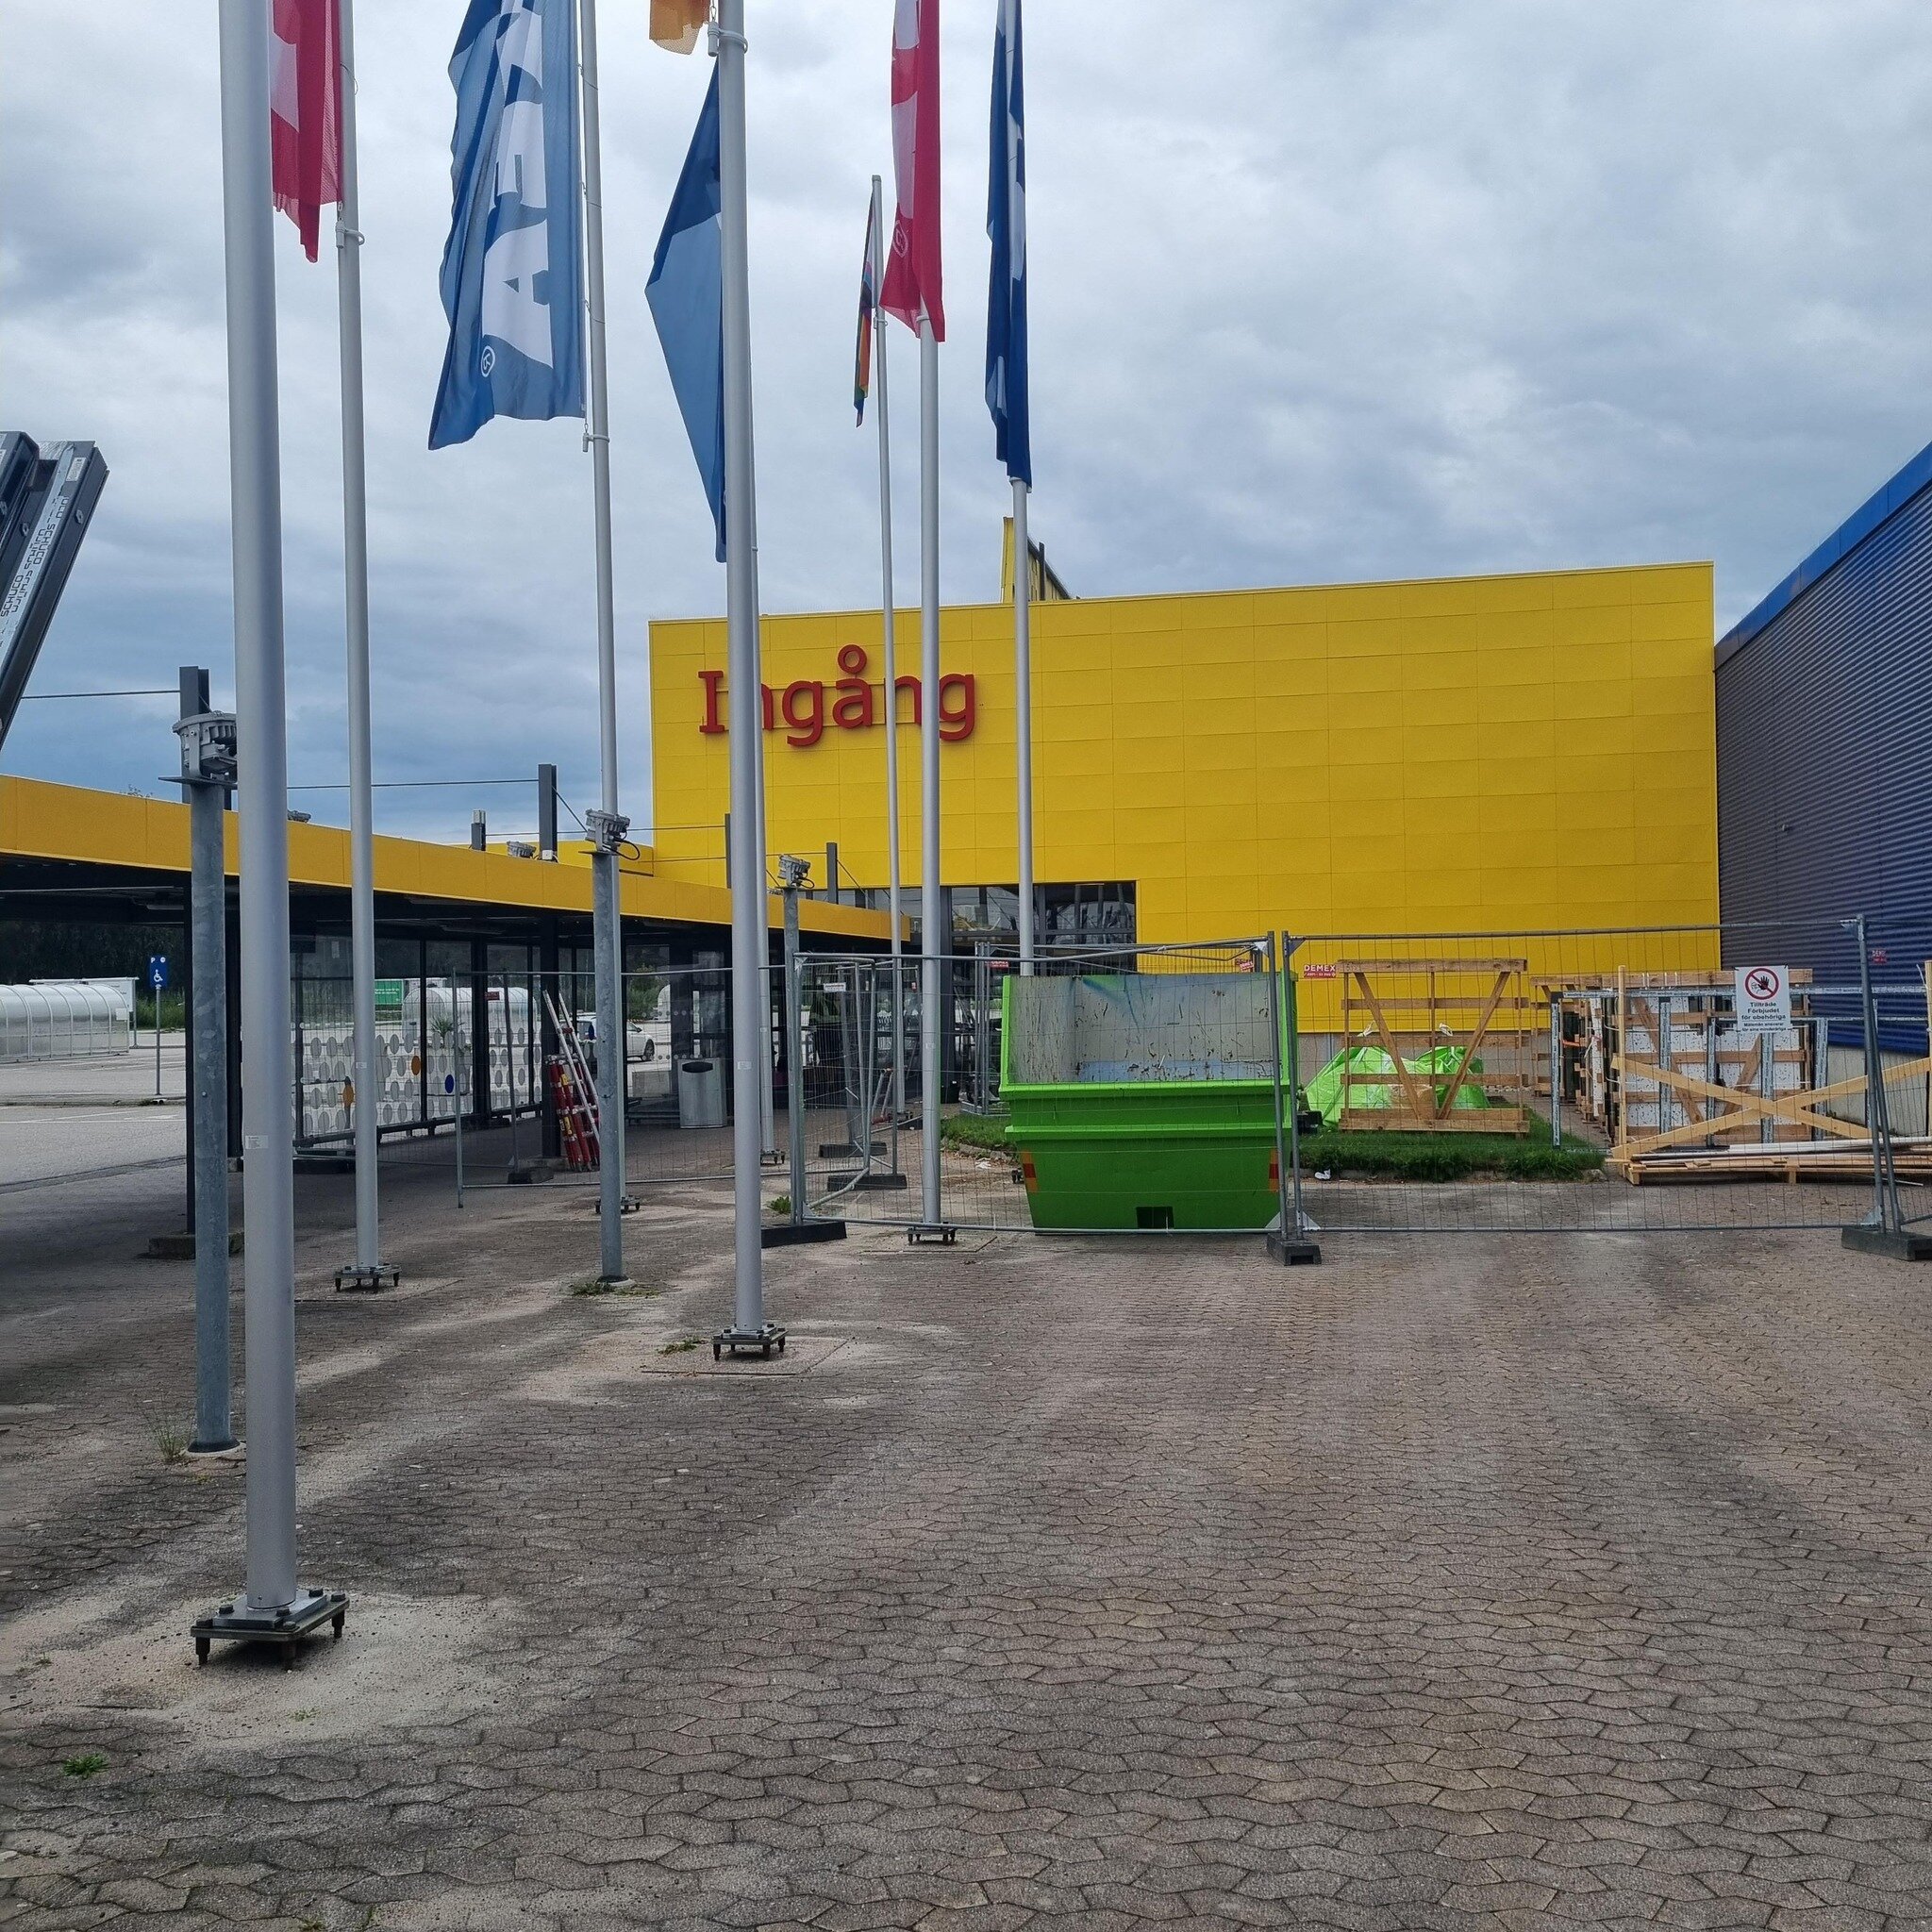 Nytt projekt vid IKEA &Ouml;rebro:

https://www.bomansvahn.se/projekt/mall2-bn2fg-t9jek-a4rky-ebjsz